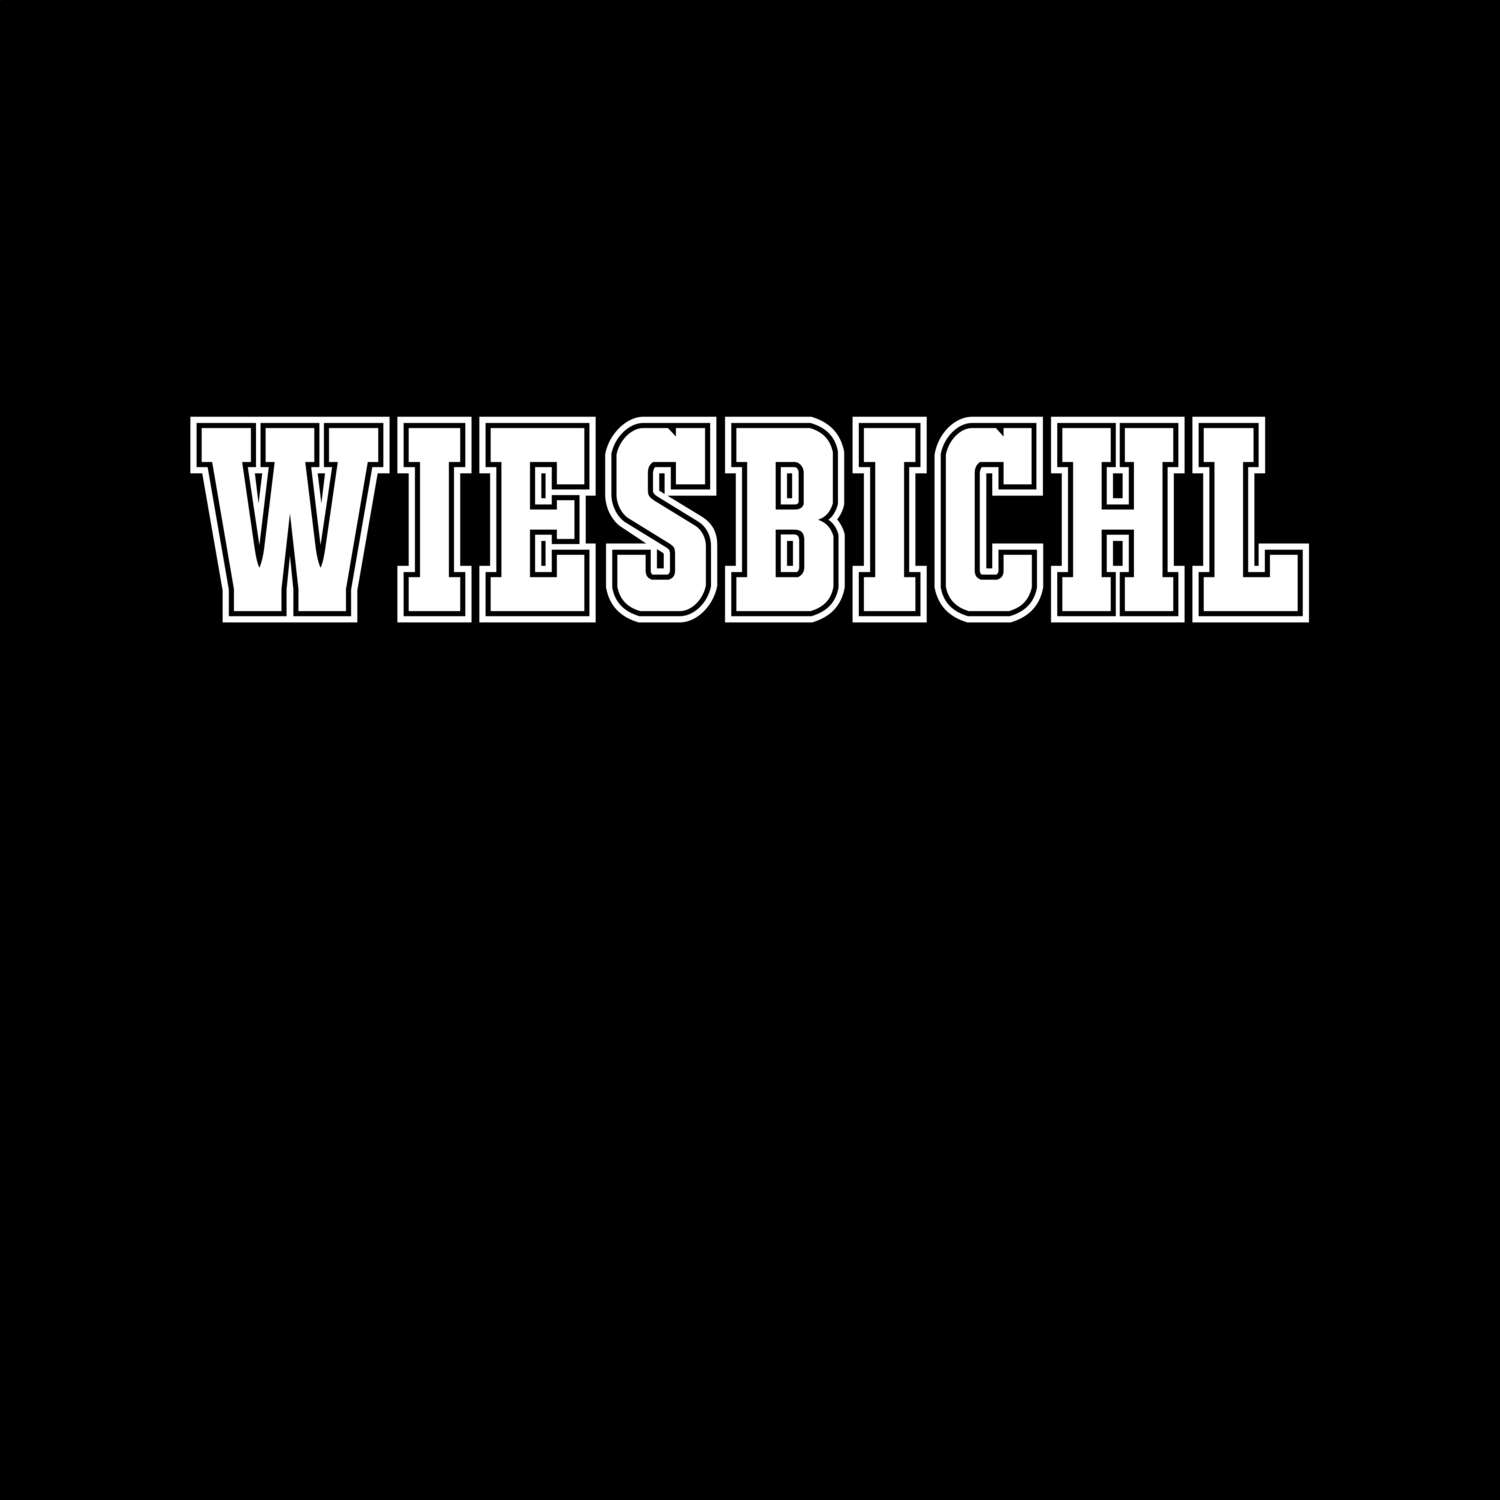 Wiesbichl T-Shirt »Classic«